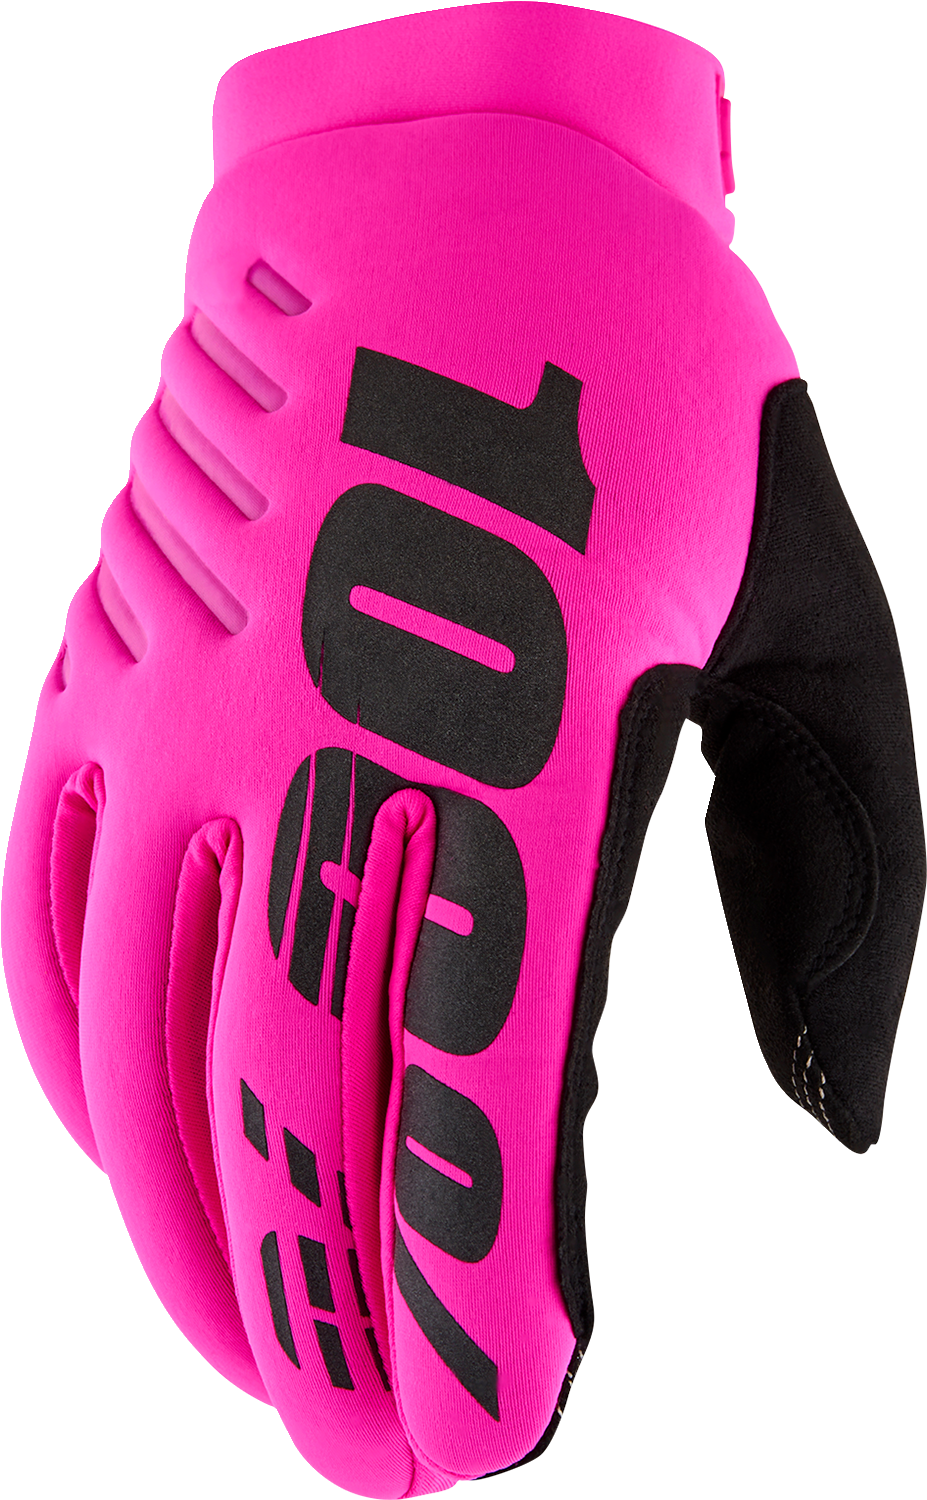 100% Women's Brisker Gloves - Neon Pink/Black - Large 10005-00008